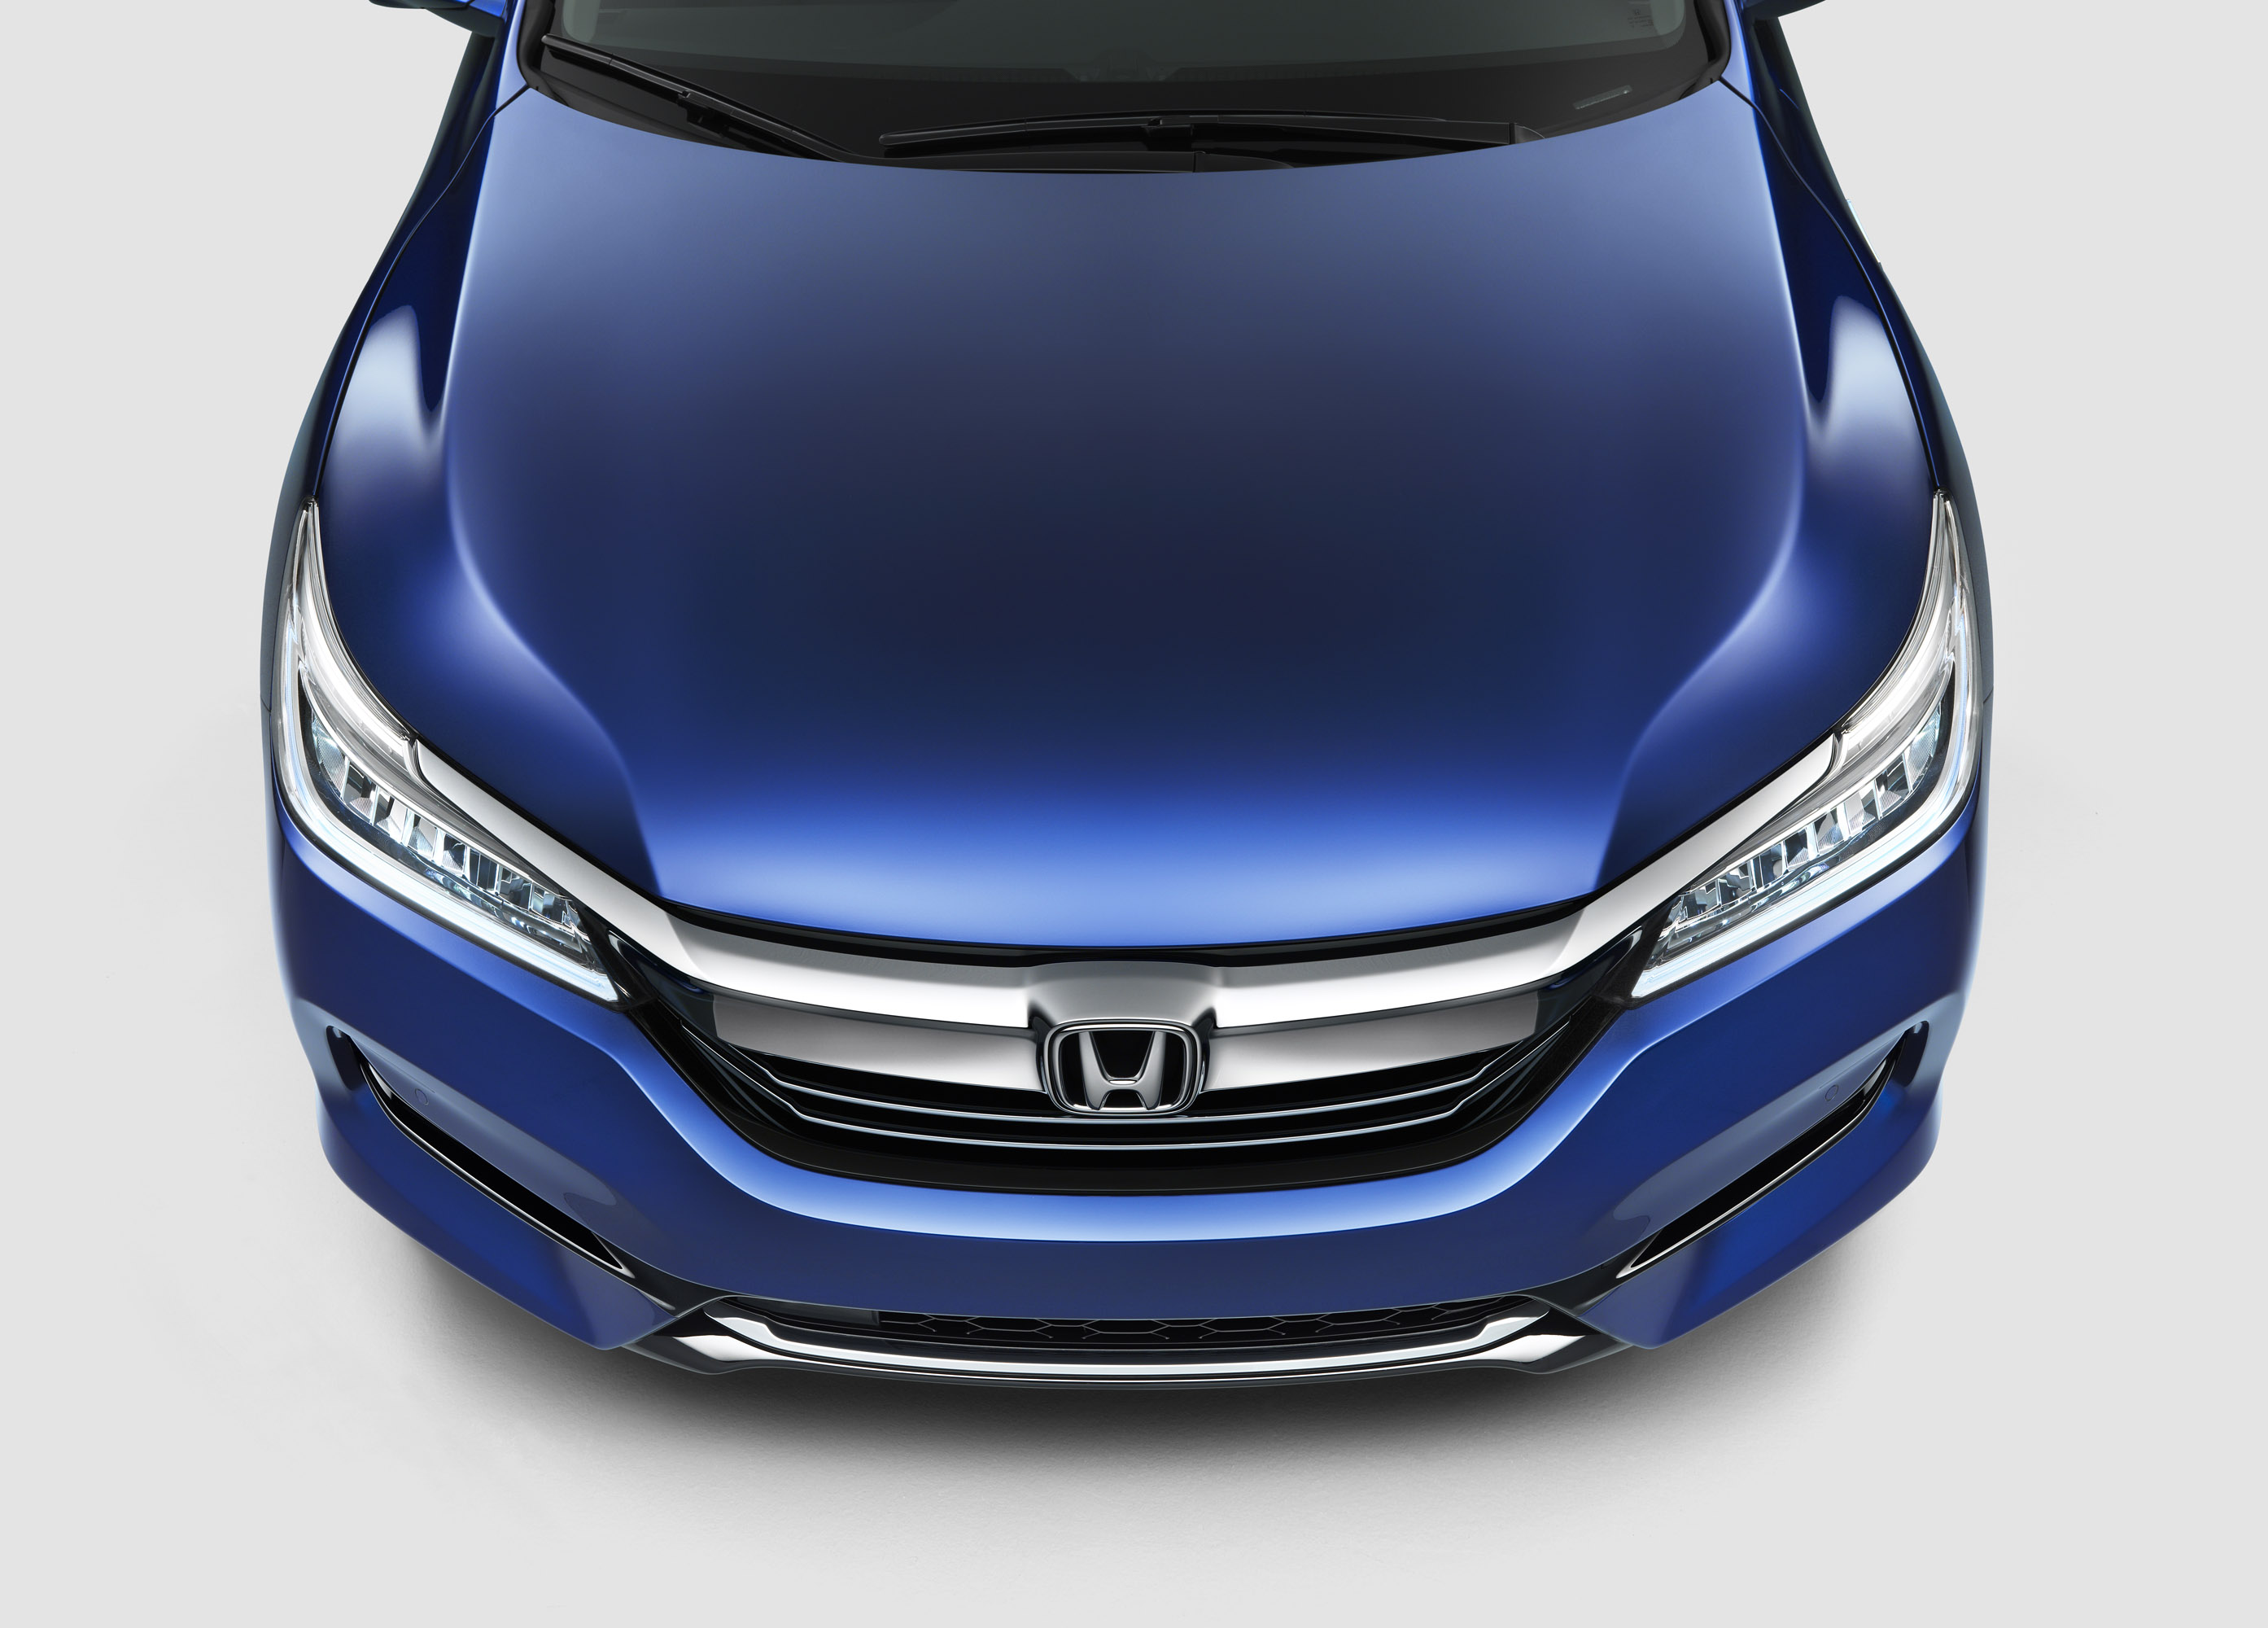 Honda Clarity Plug-In Hybrid exterior specifications